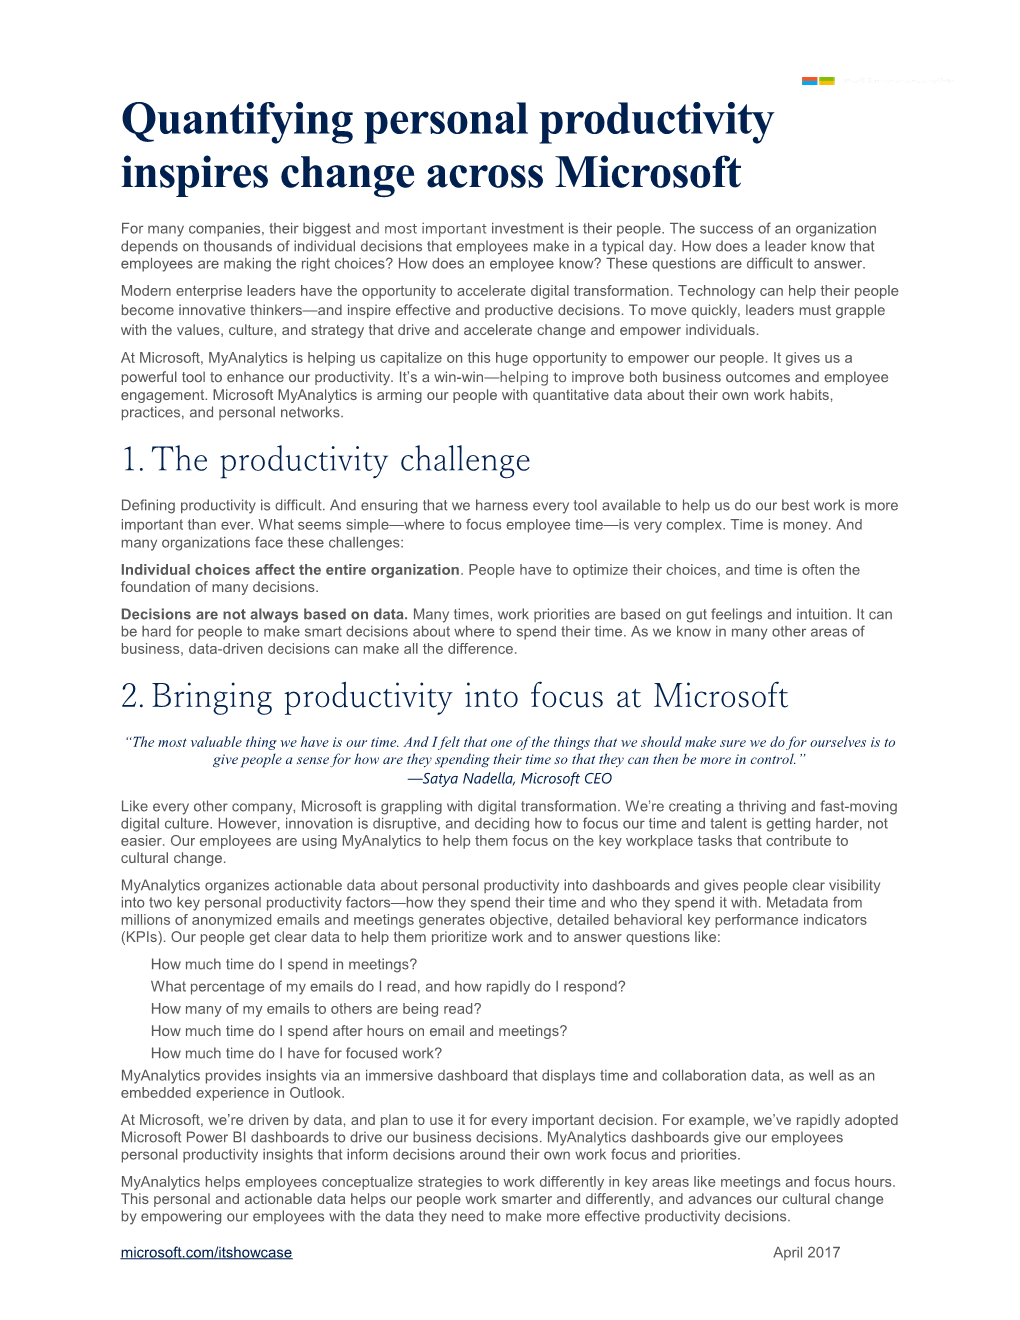 Quantifying Personal Productivity Inspires Change Across Microsoft